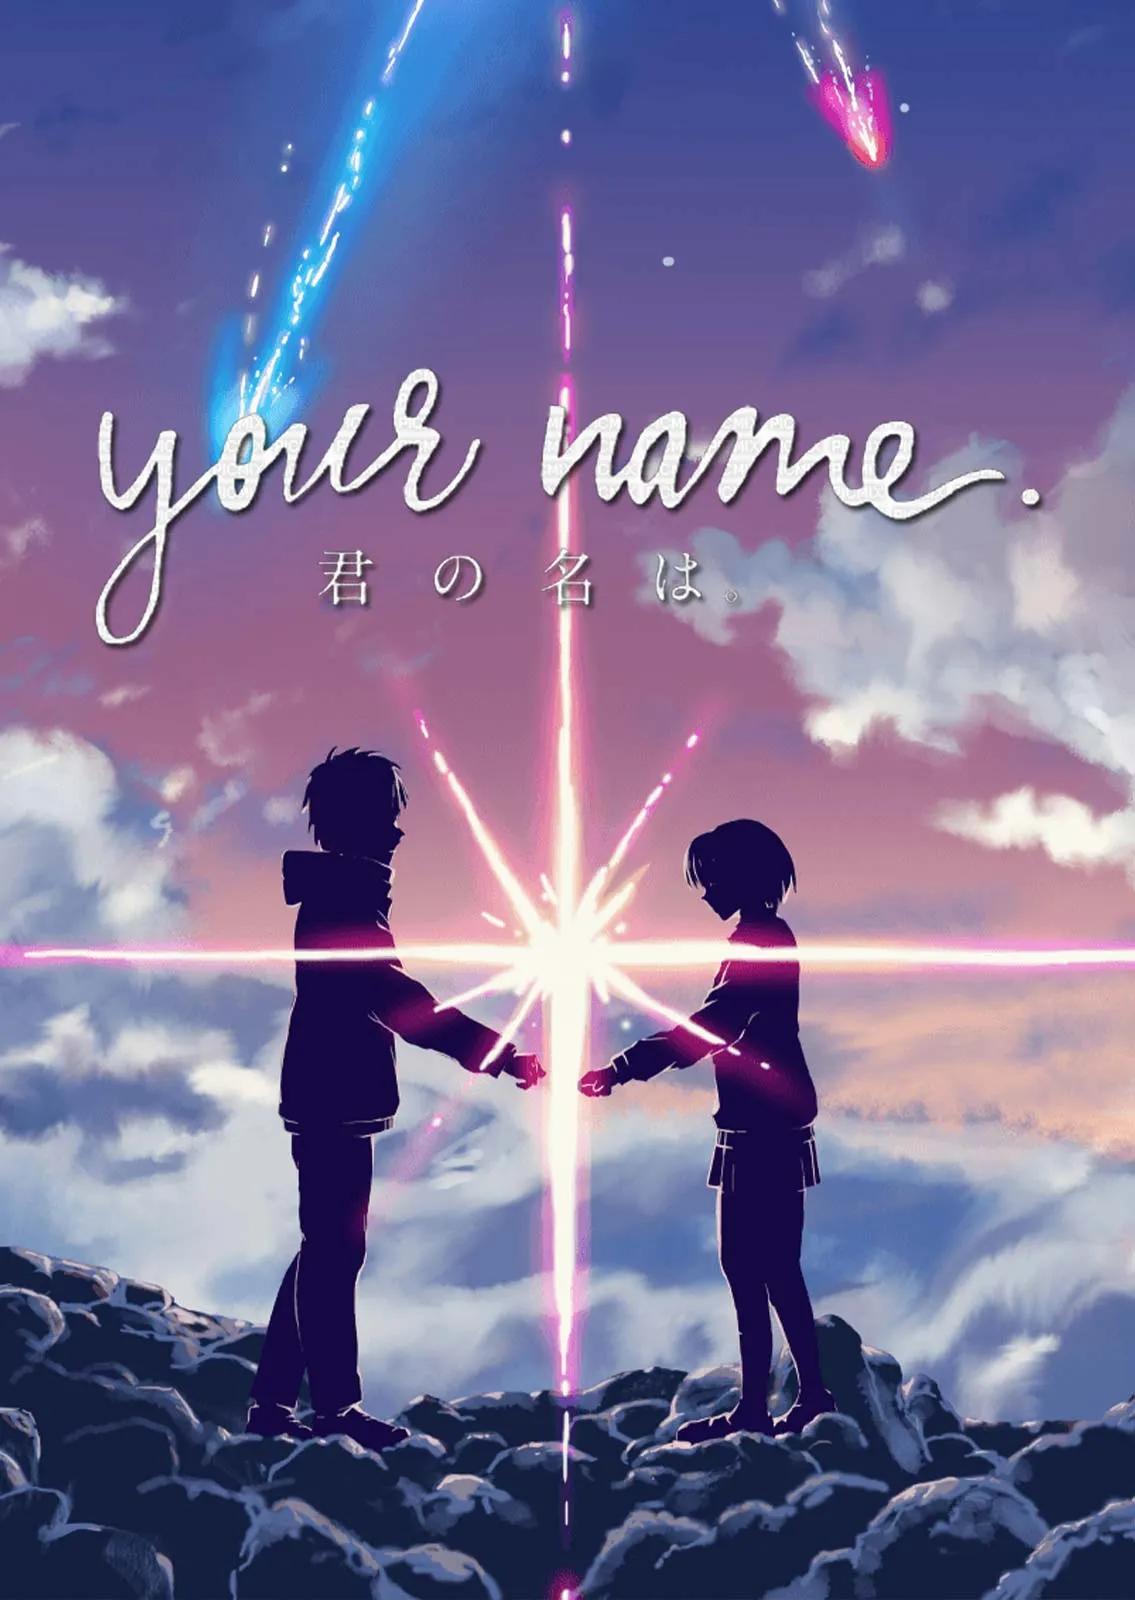 نام تو